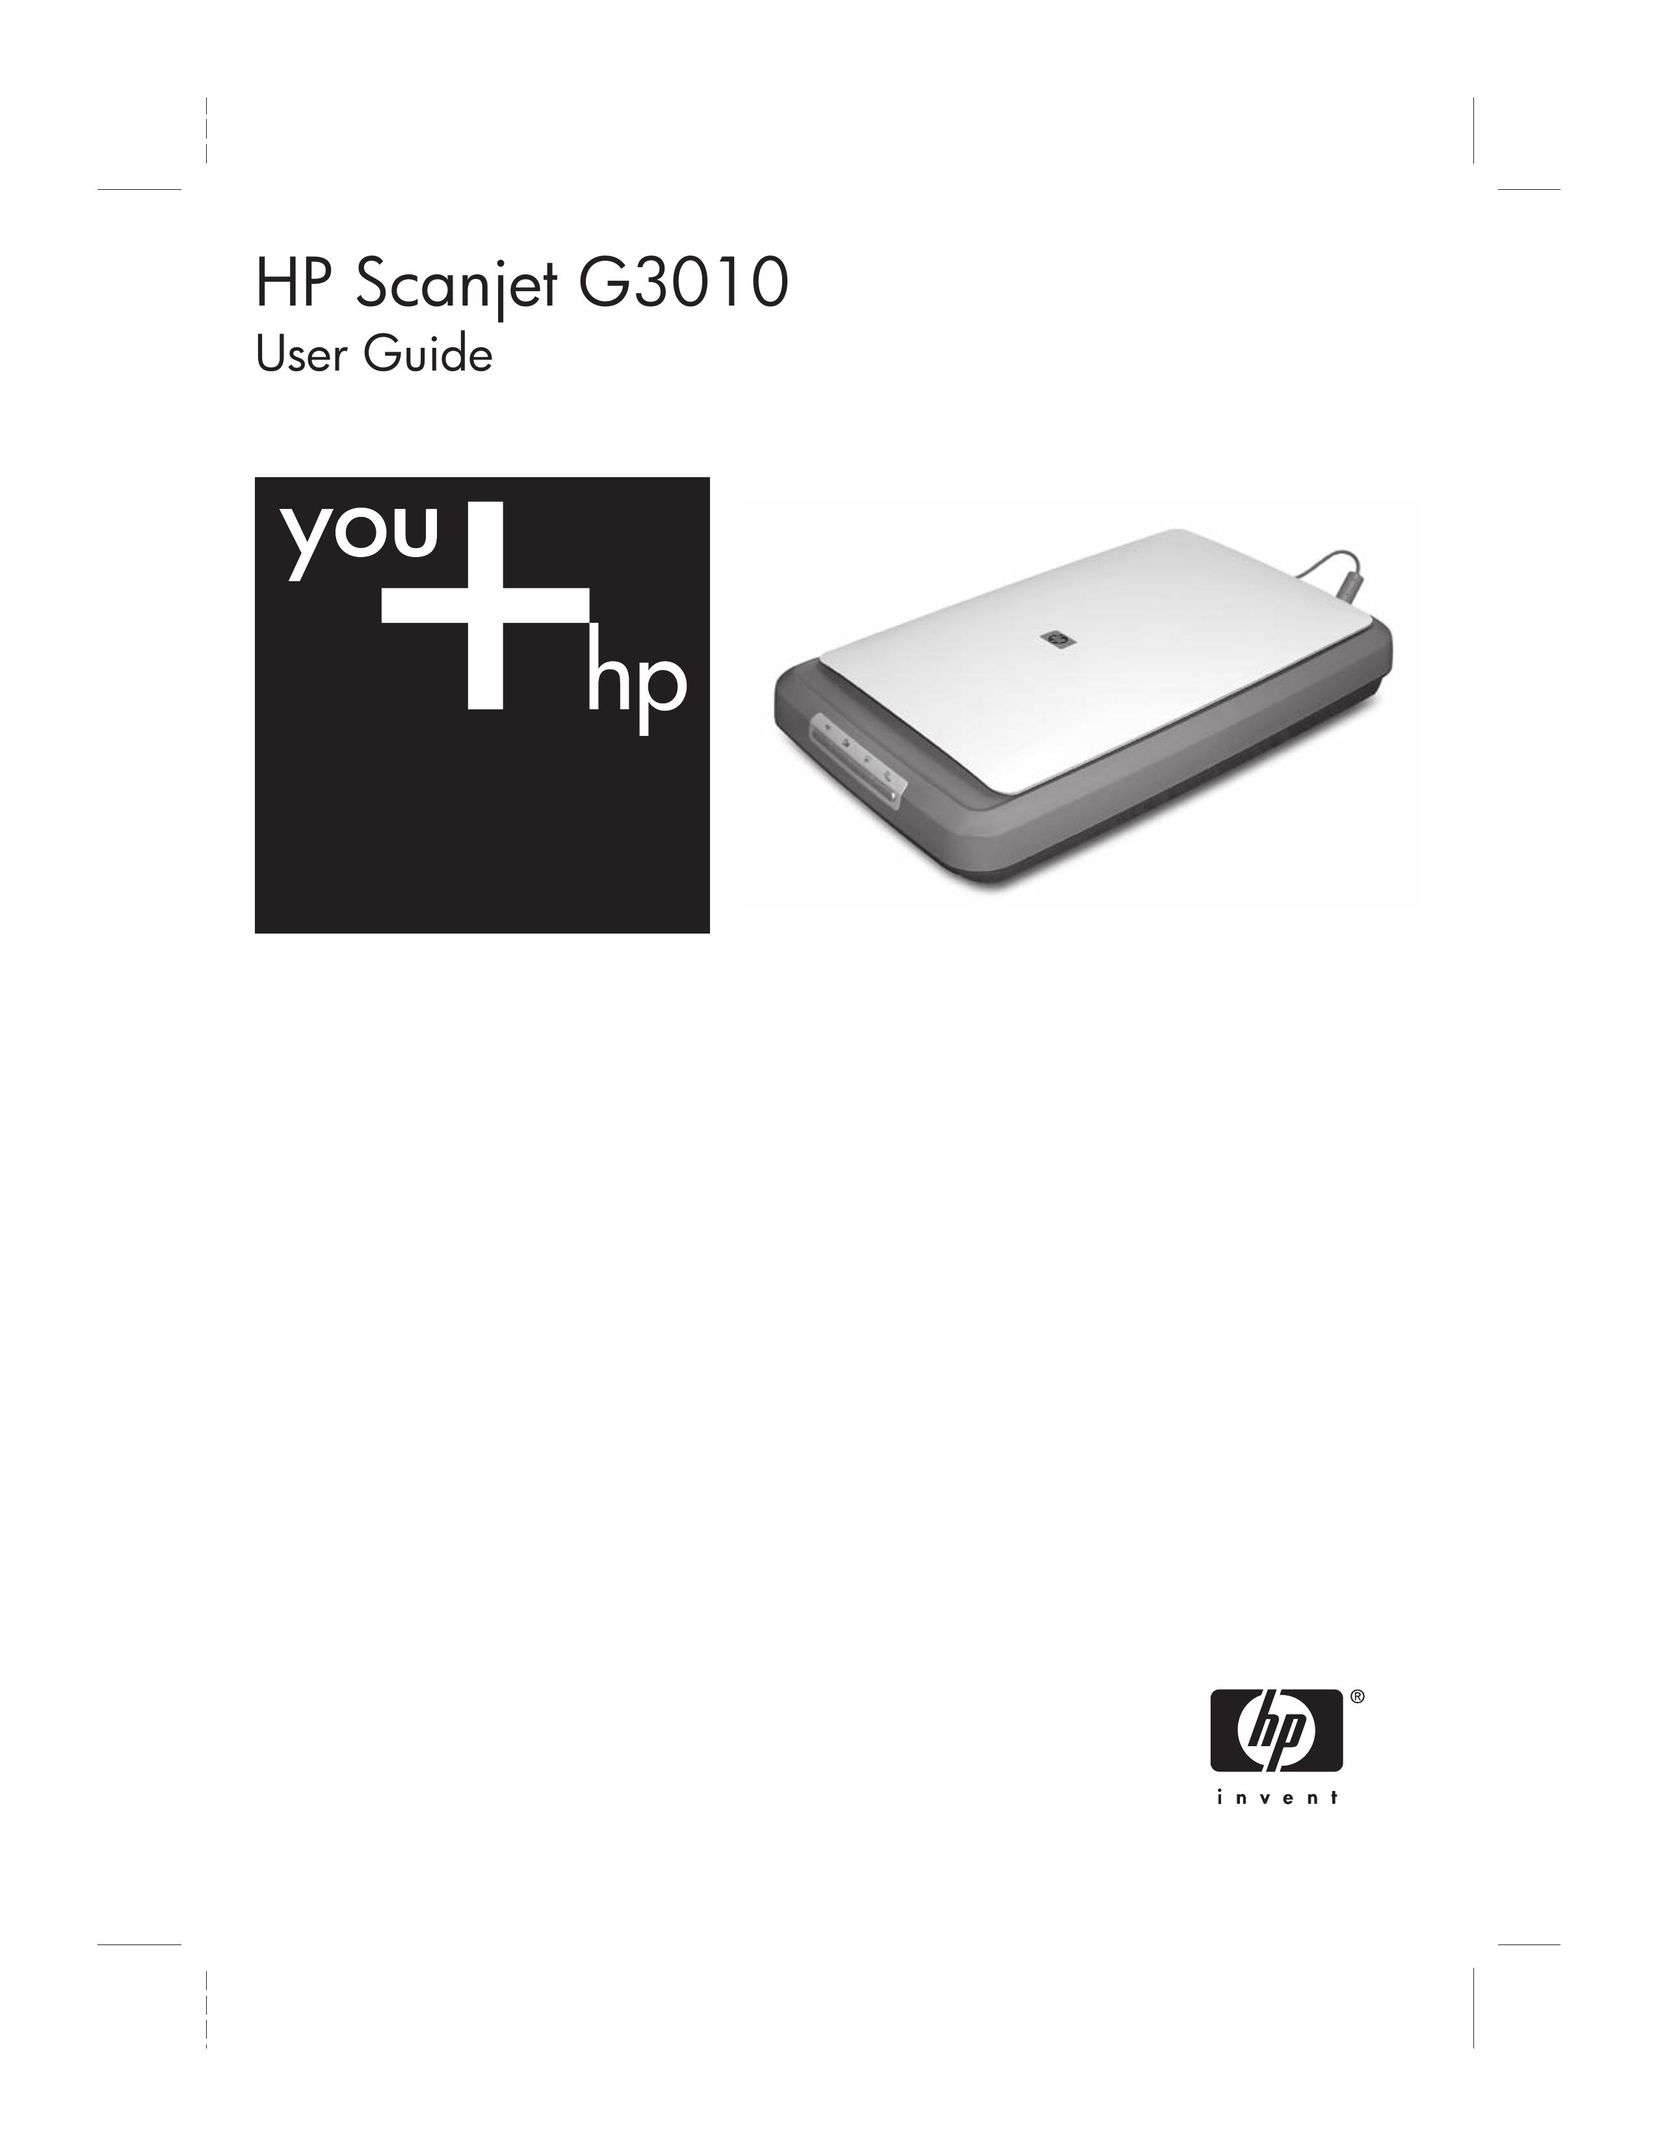 Lewmar G3010 Scanner User Manual